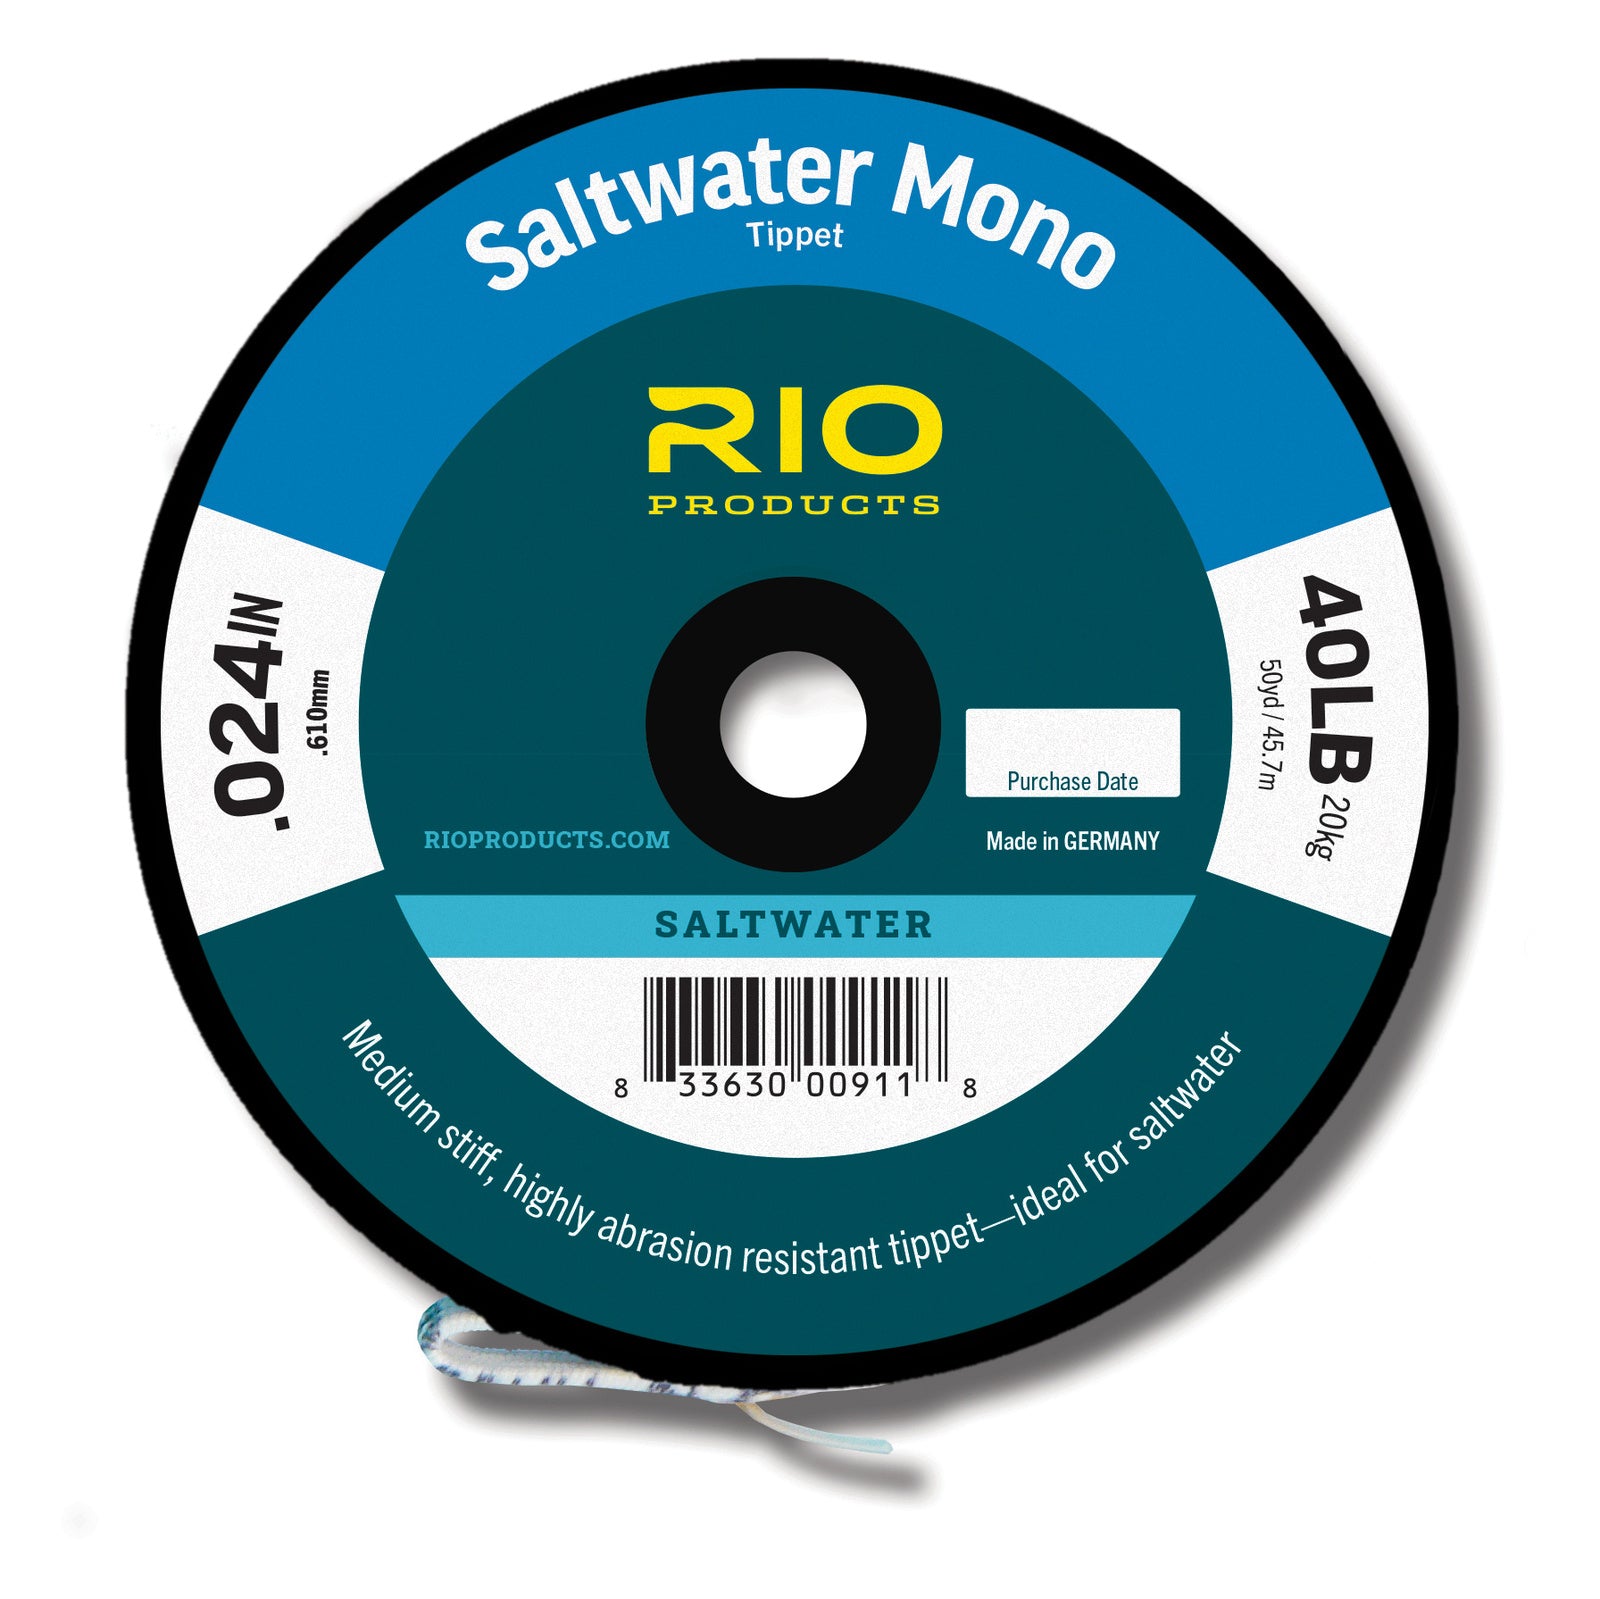 Rio Saltwater Mono Tippet 20 lb